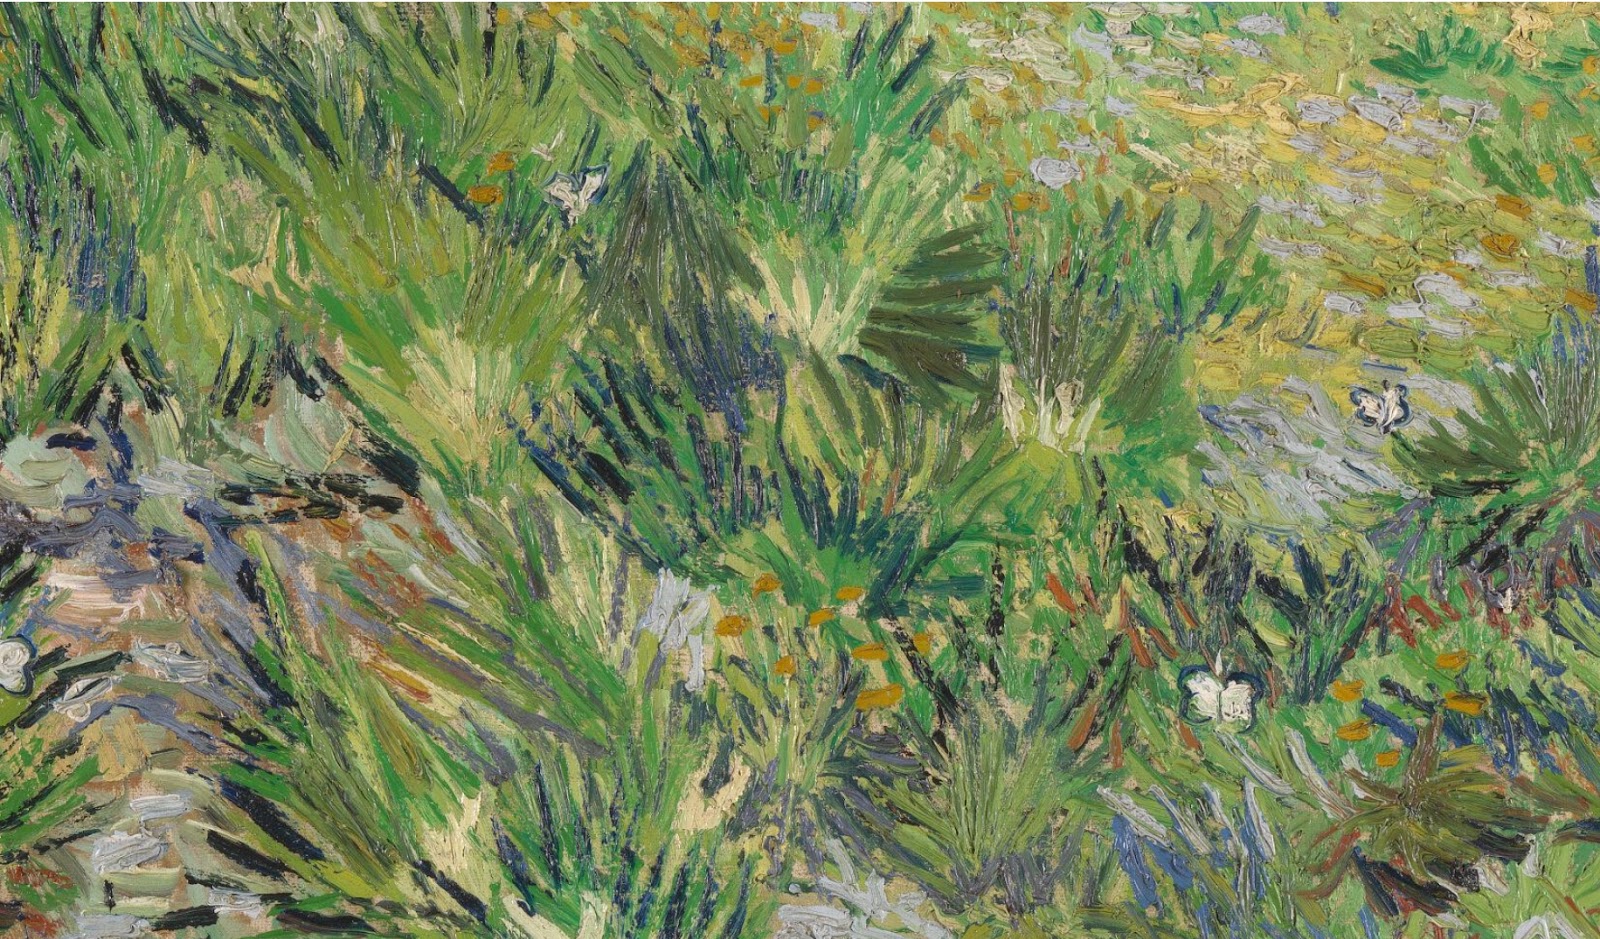 Vincent+Van+Gogh-1853-1890 (884).jpg